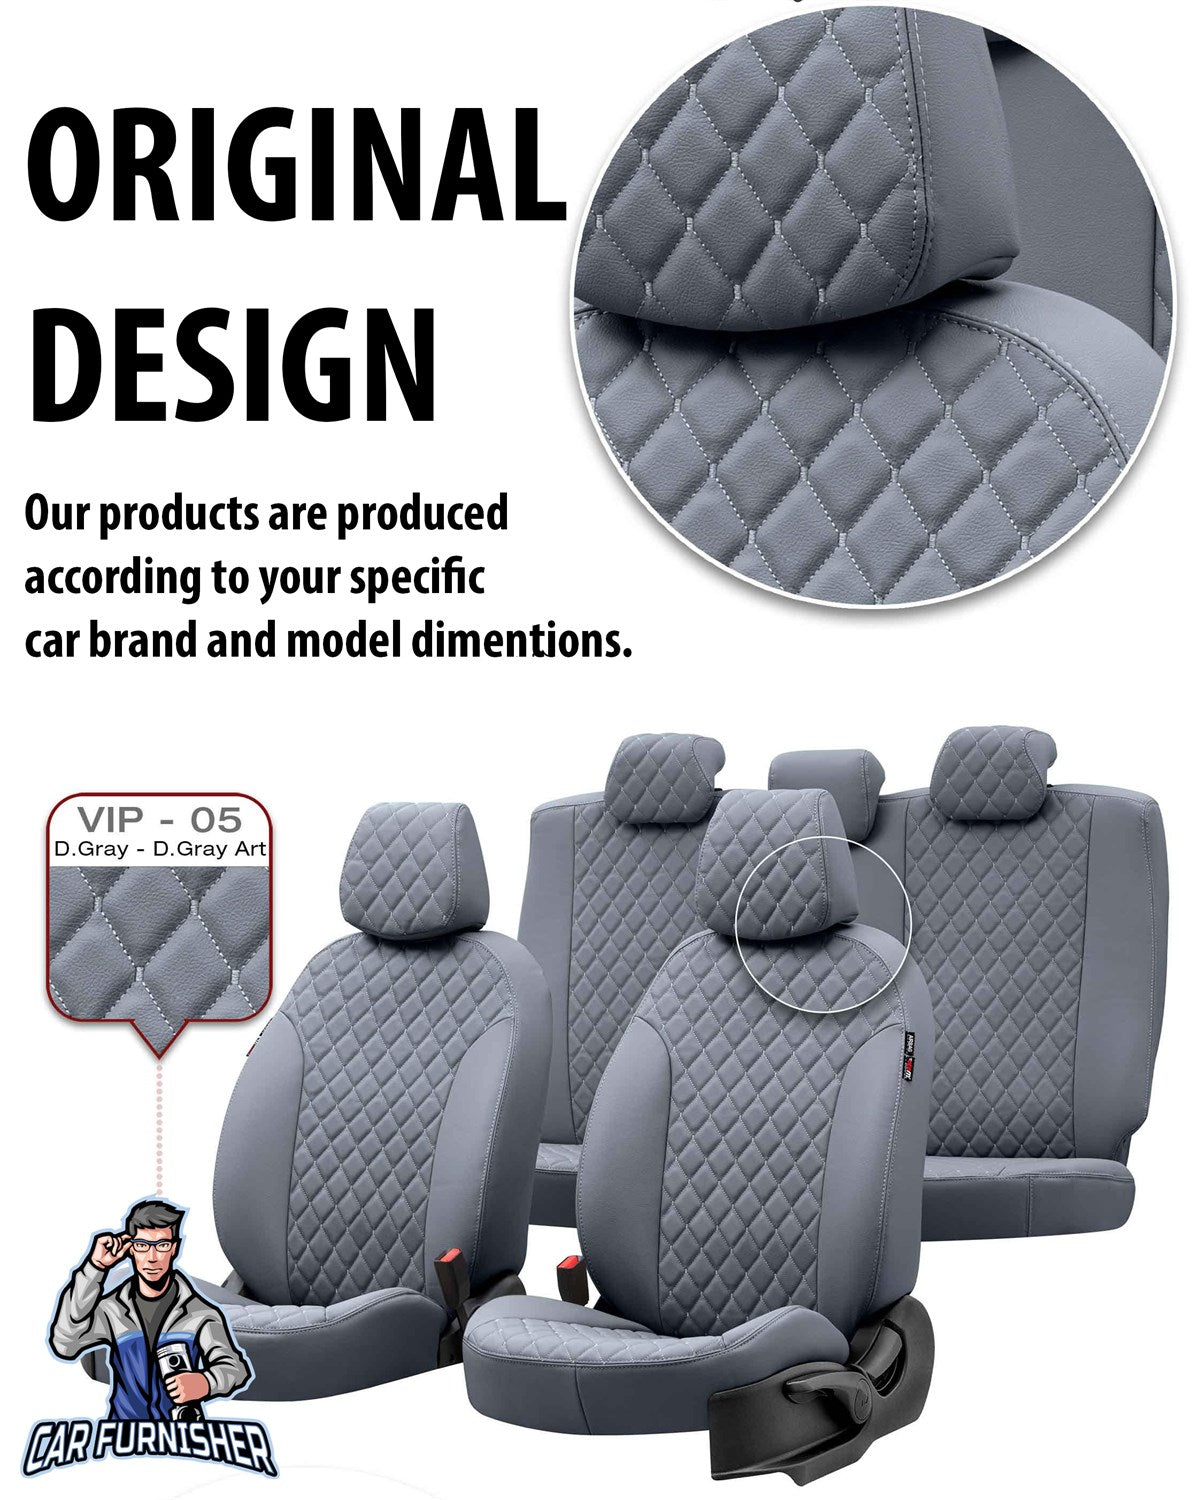 Fiat Marea Seat Covers Madrid Leather Design Blue Leather